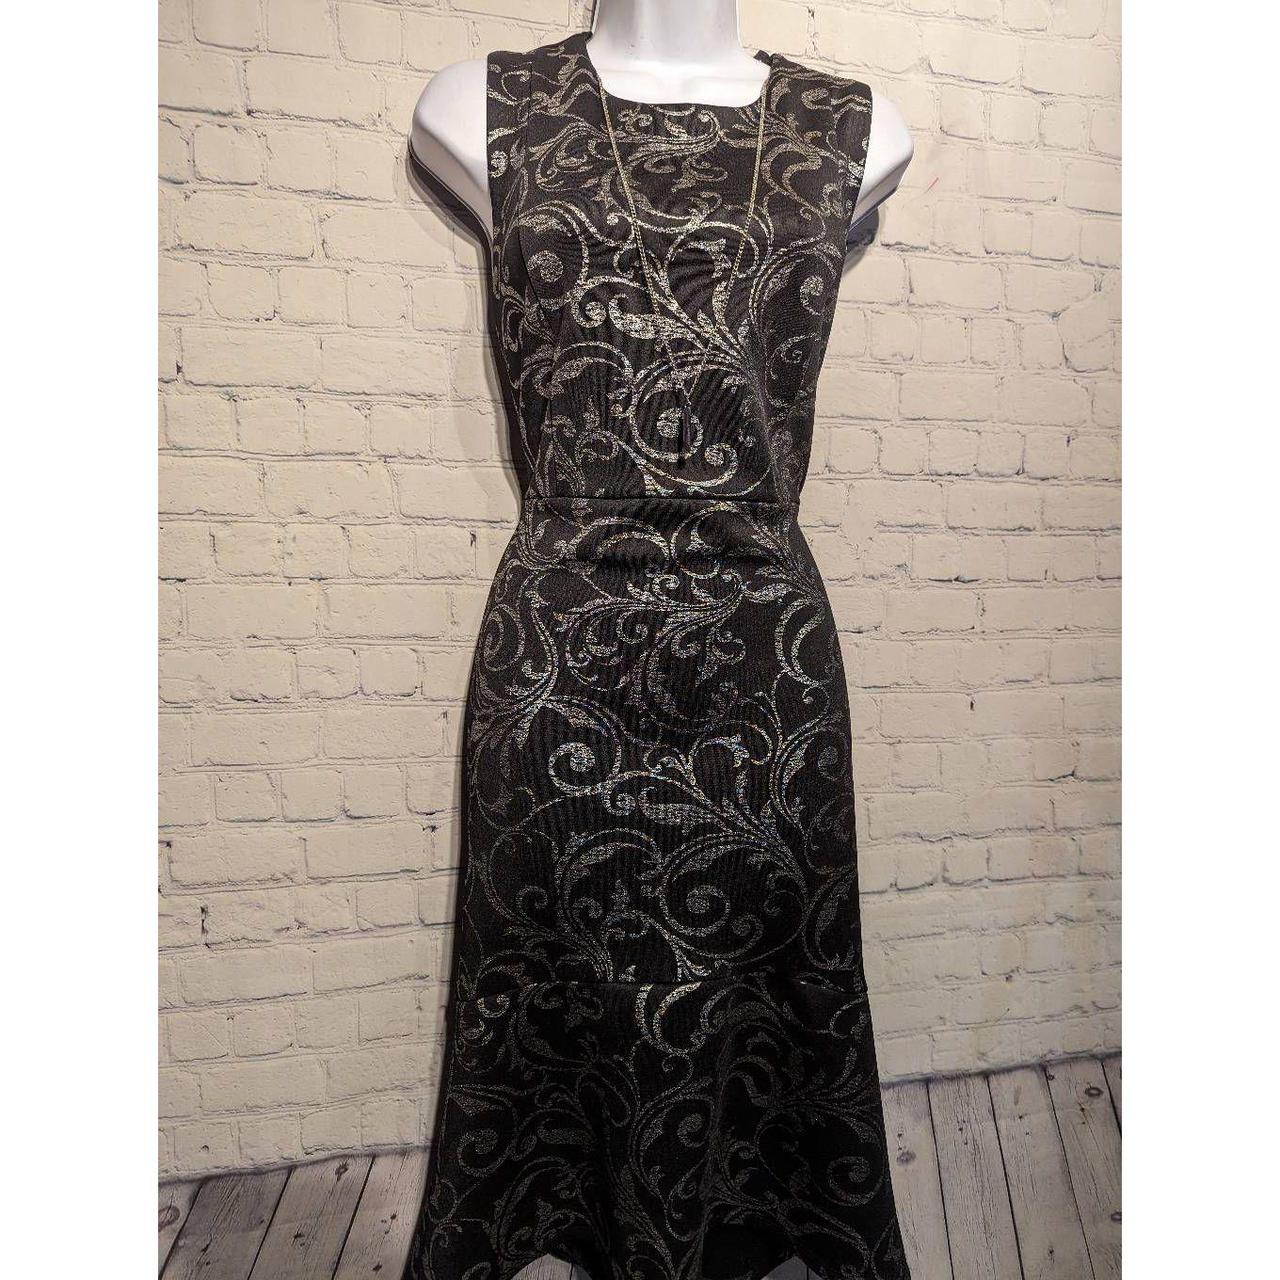 Enfocus Studio Women's Black and Silver Dress (2)